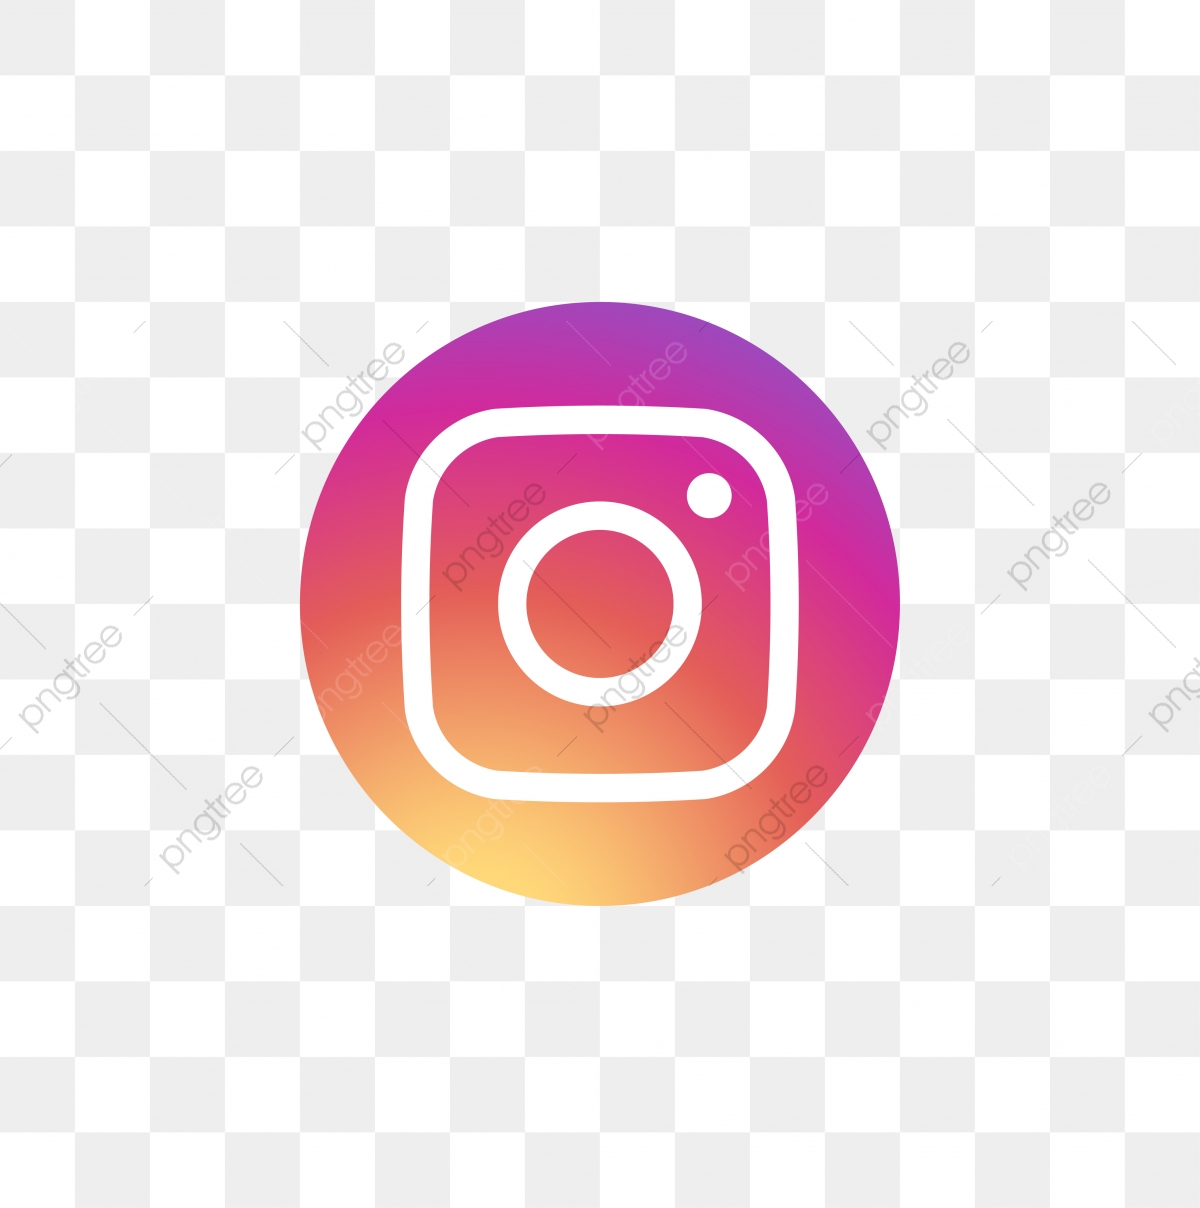 symbols for instagram